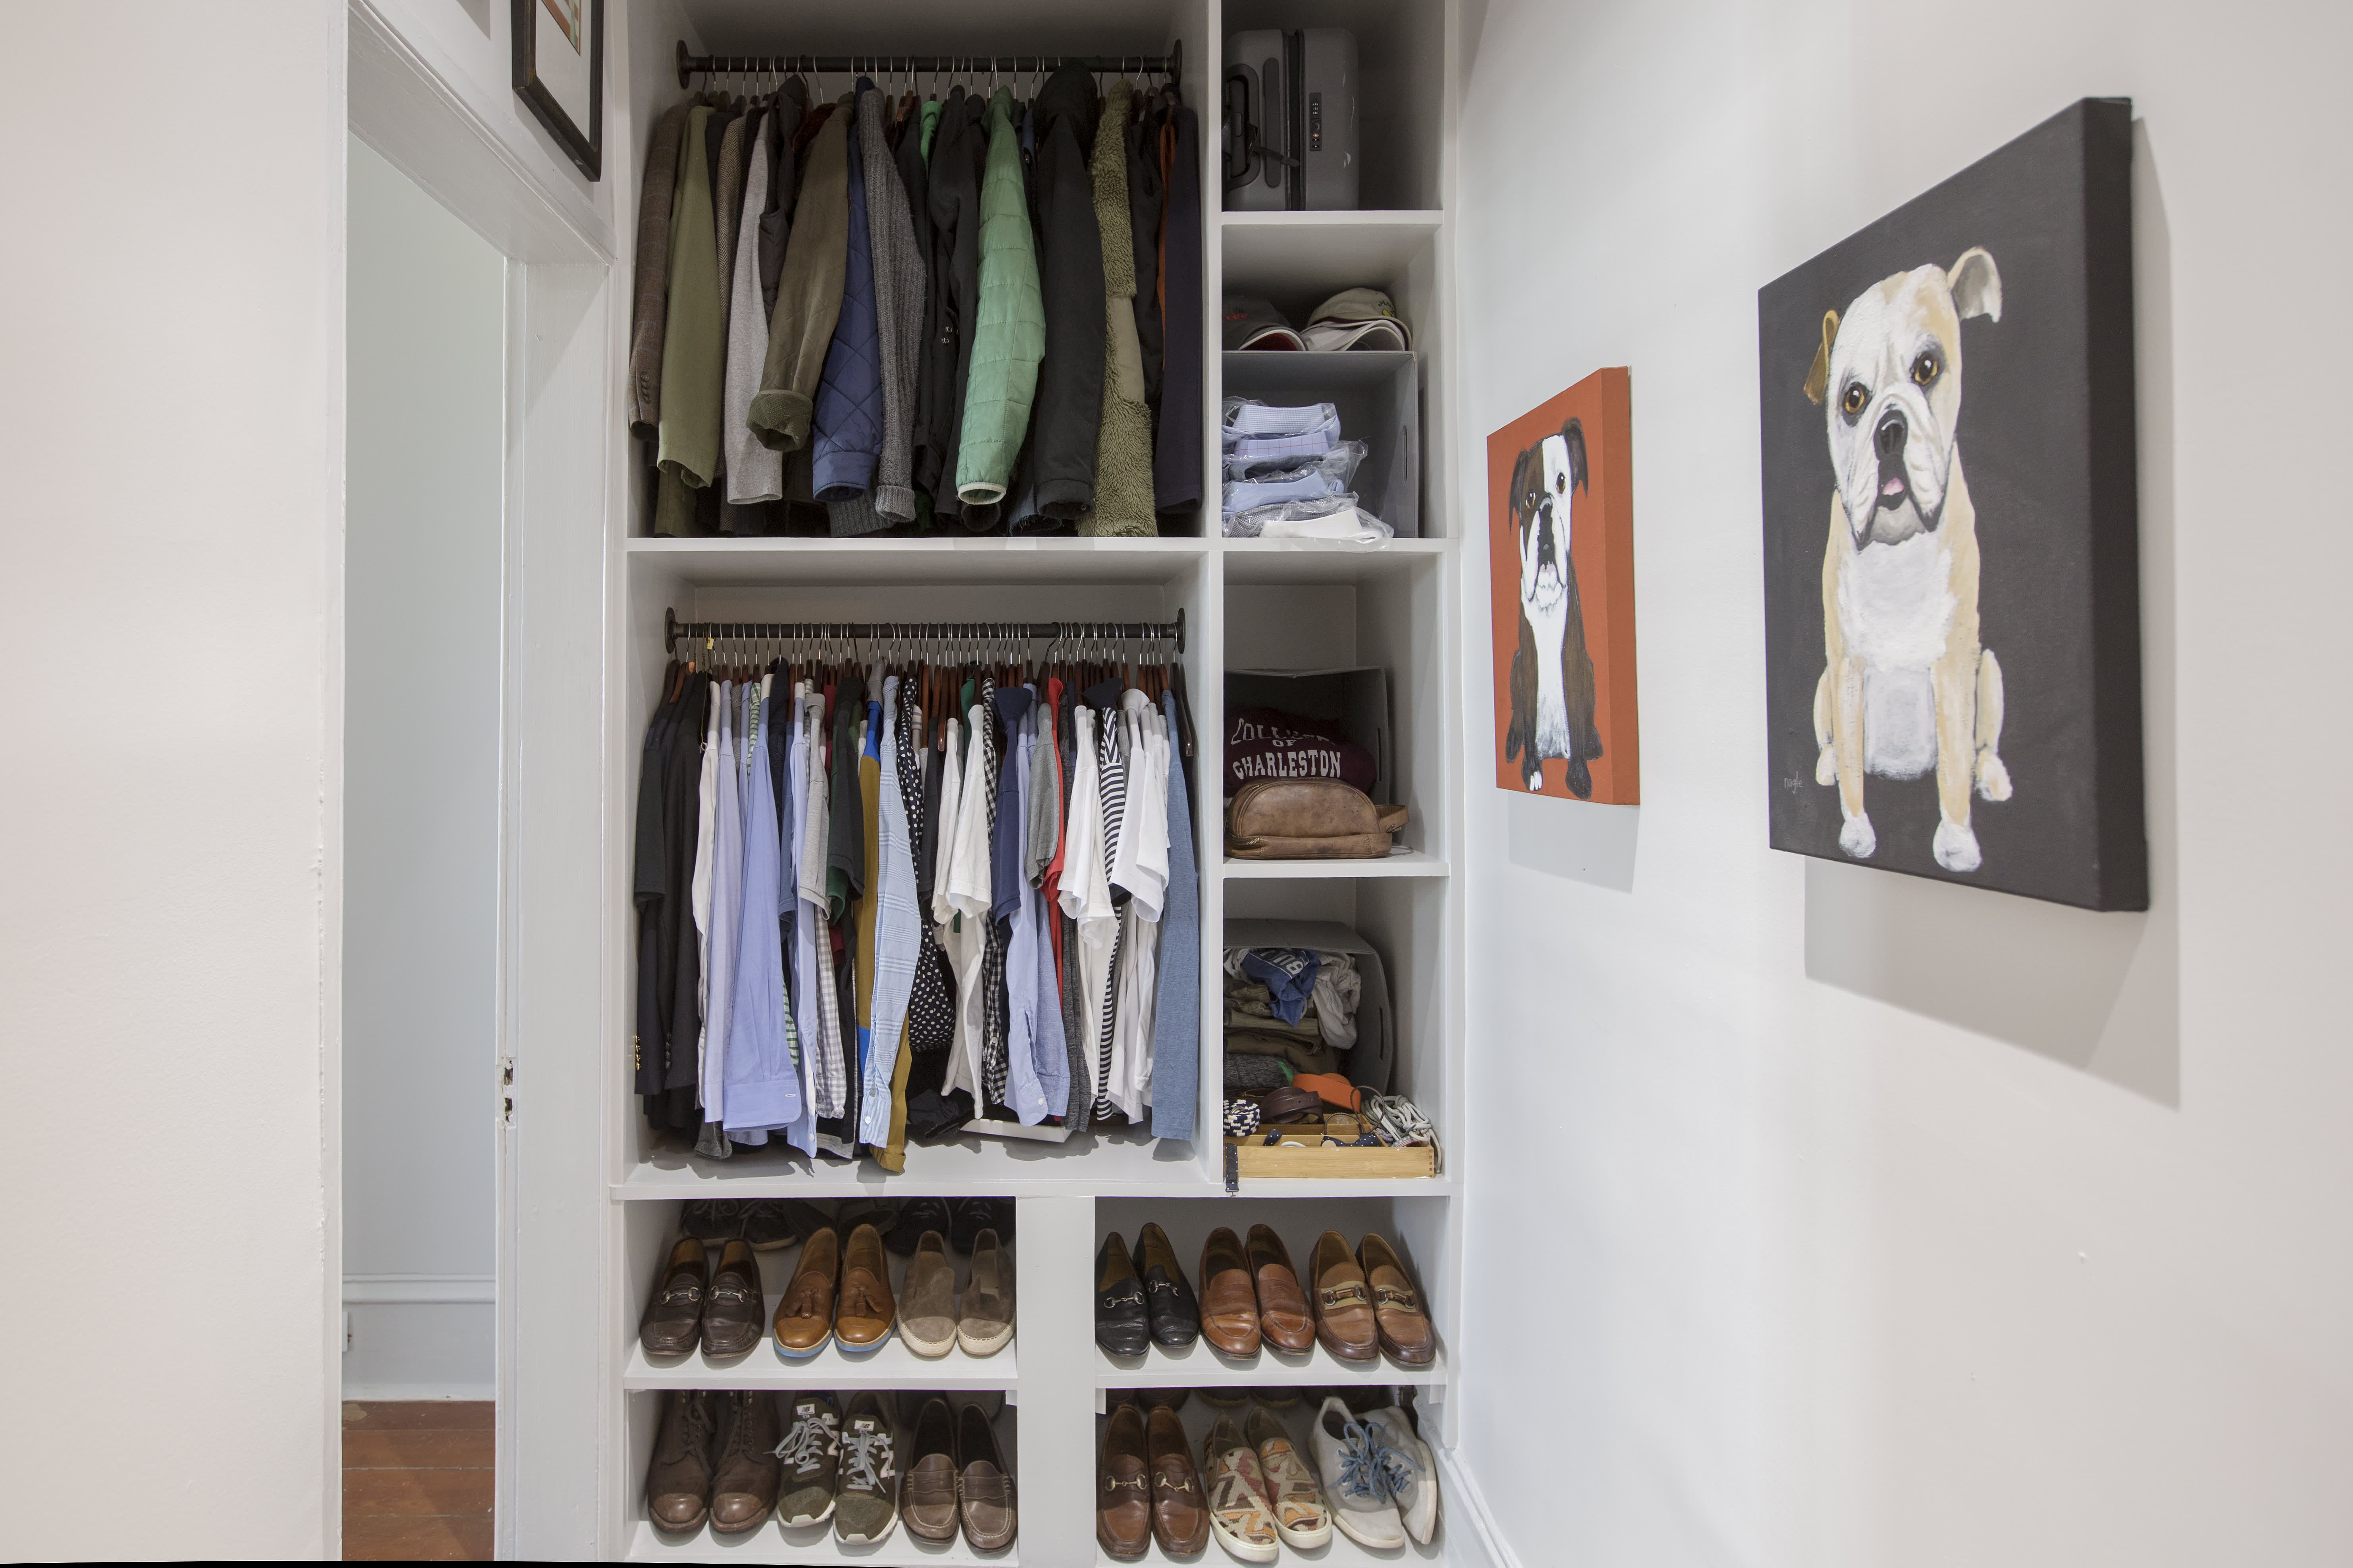 10 Real Life Ways to Make Tiny Closets Work